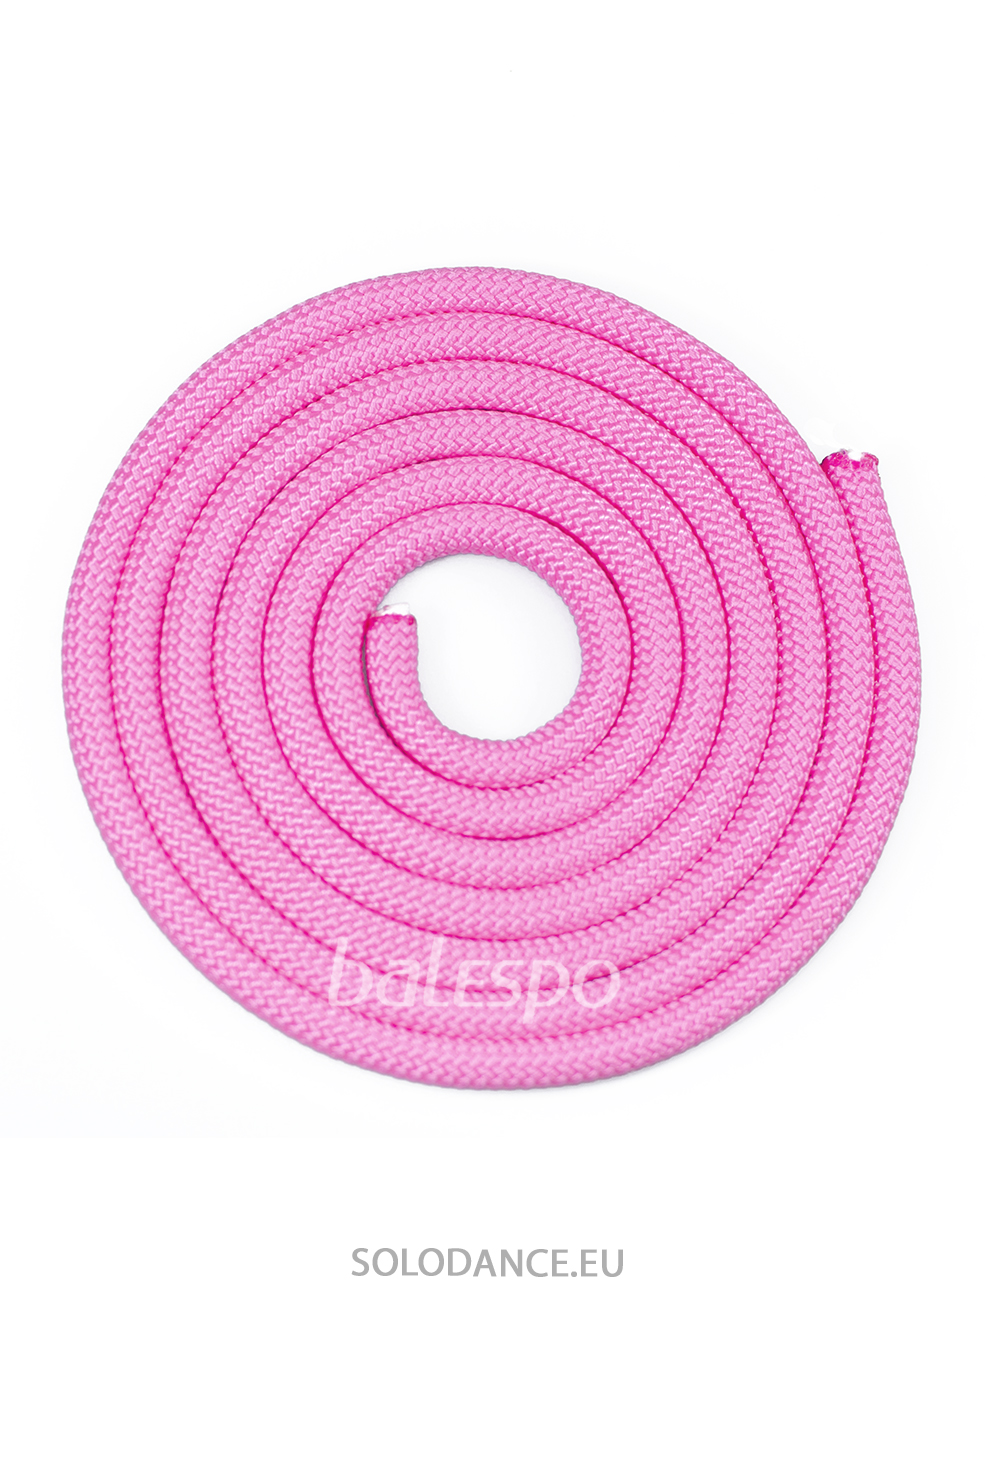 Gymnastic rope BALESPO neon pink 2,5 m